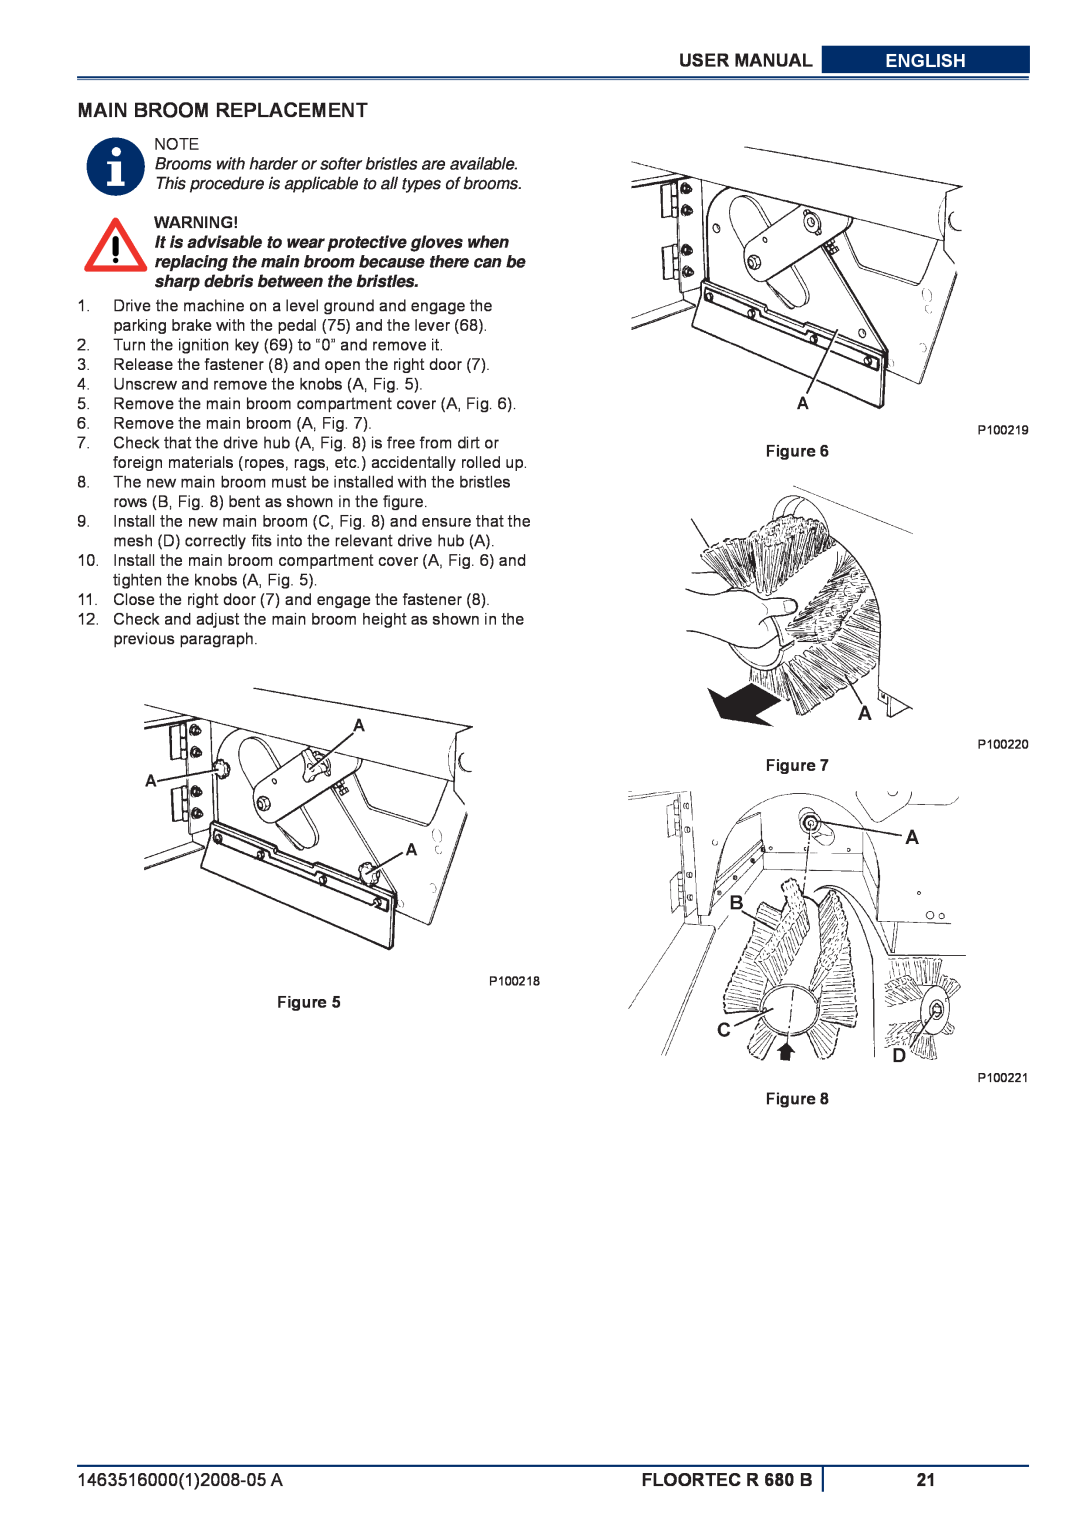 Nilfisk-ALTO manuel dutilisation Main Broom Replacement, English, FLOORTEC R 680 B, Figure 